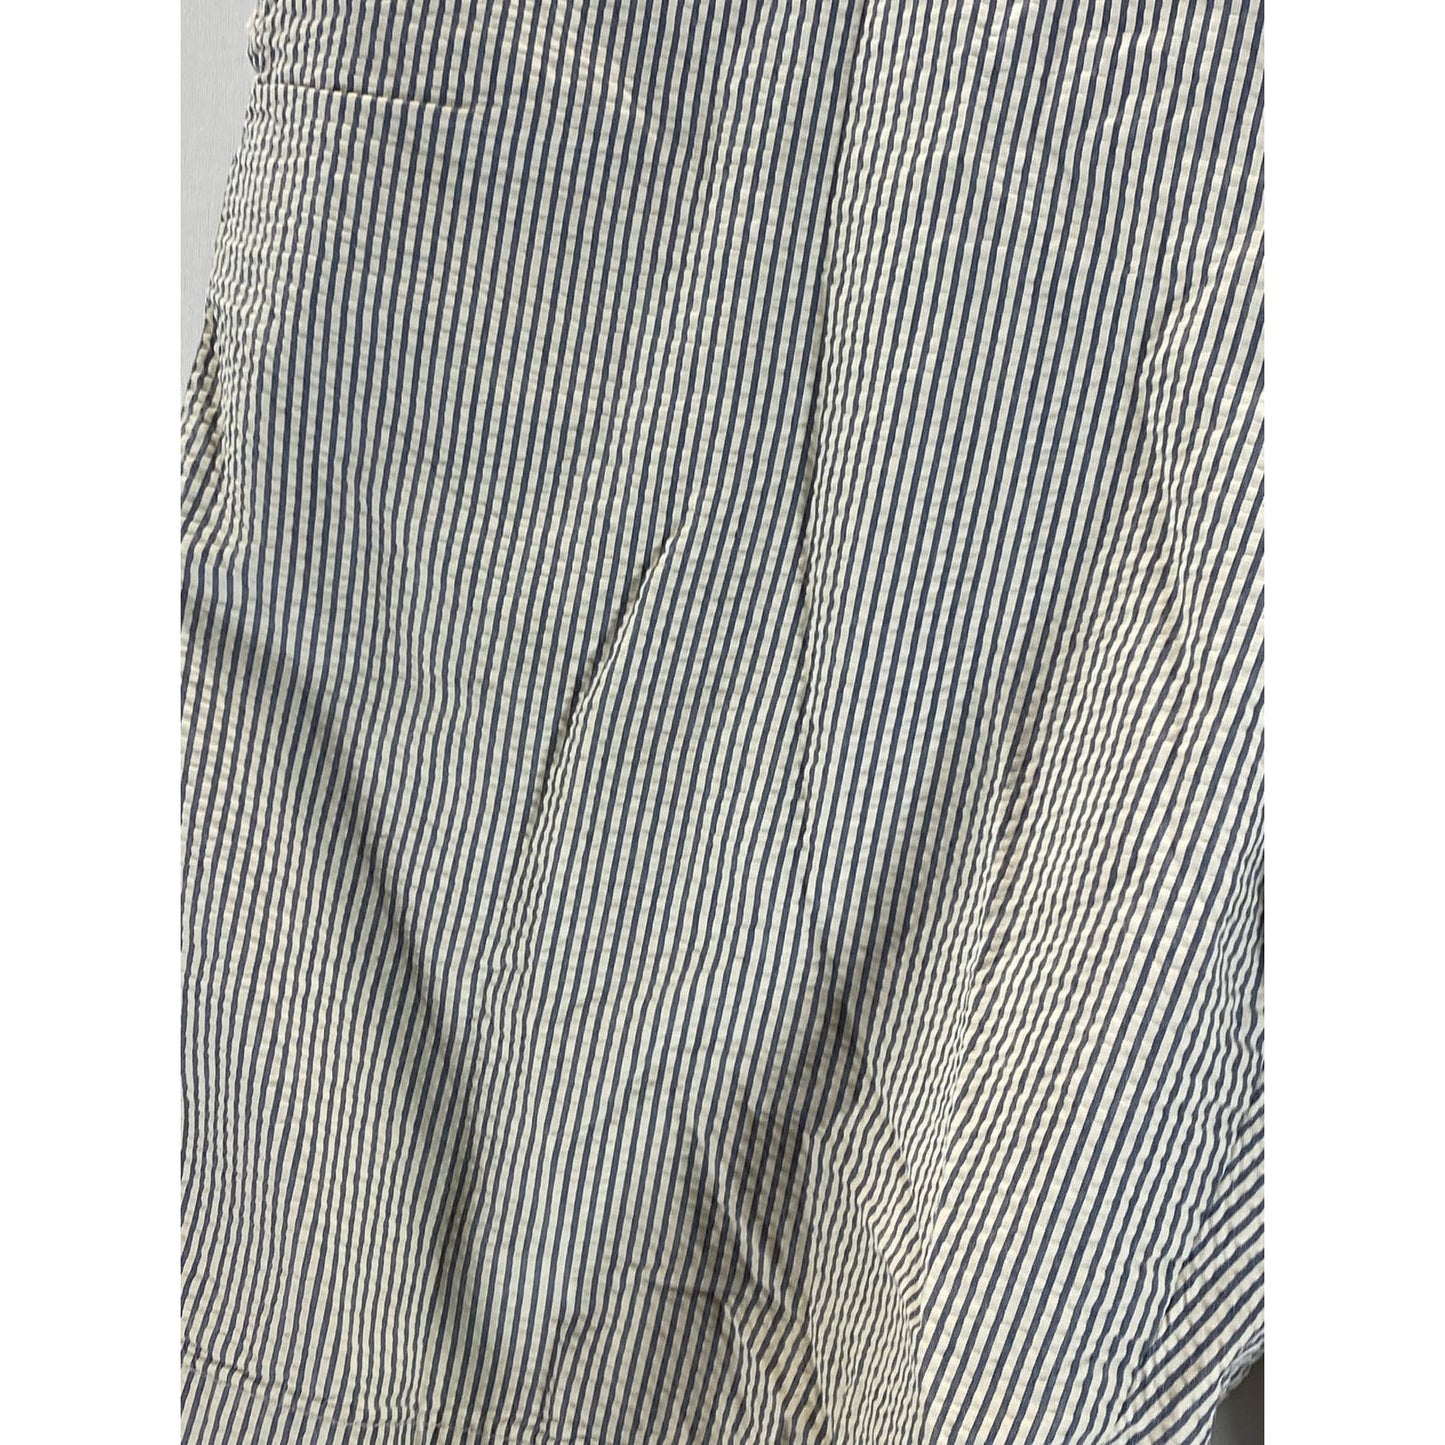 J.CREW CLUB Men's Gray Seersucker Regular-Fit 11" Chino Shorts SZ 35